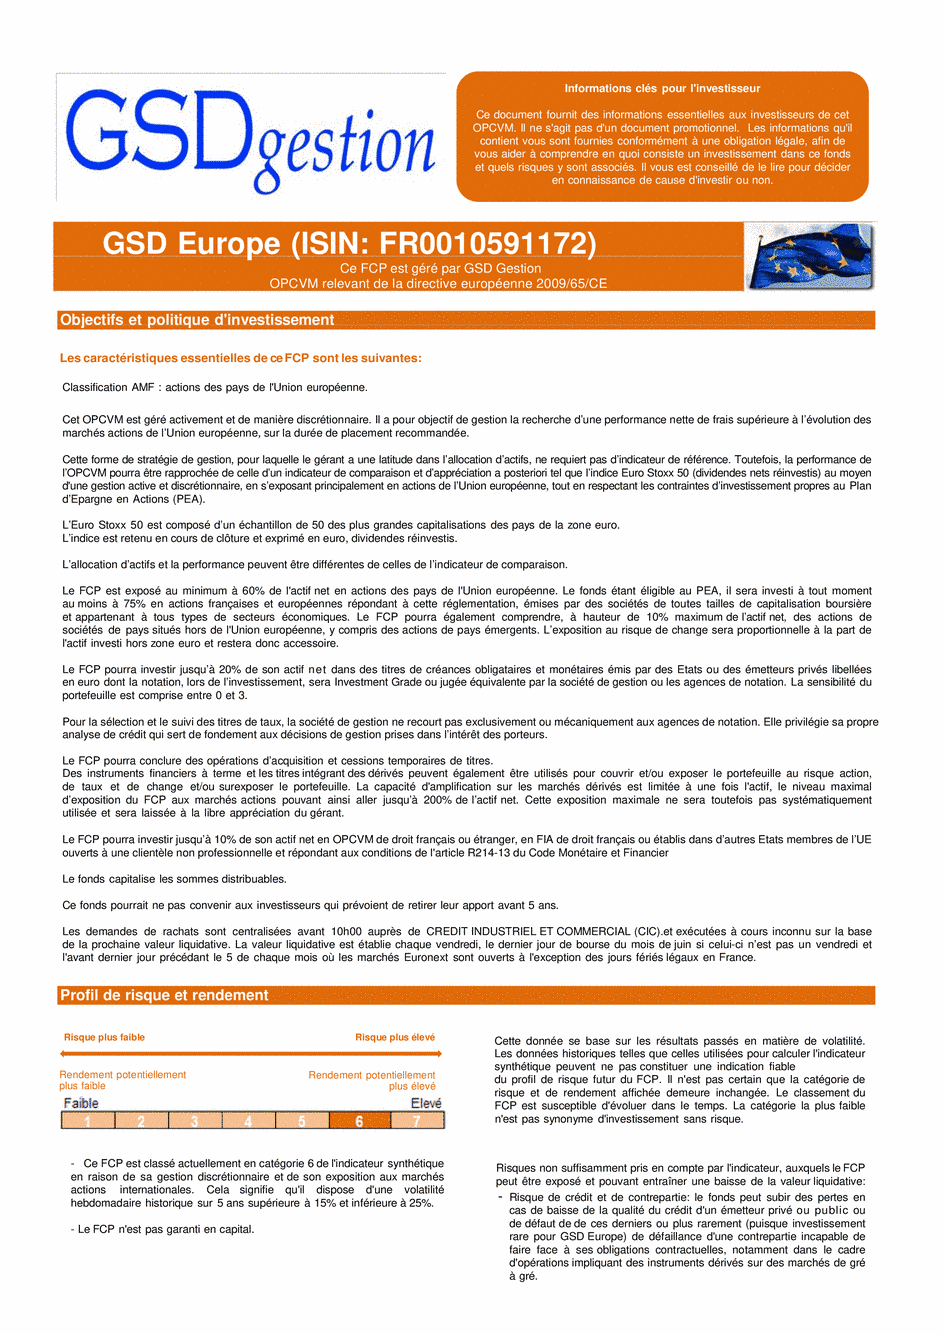 DICI-Prospectus Complet GSD Europe - 09/08/2021 - Français